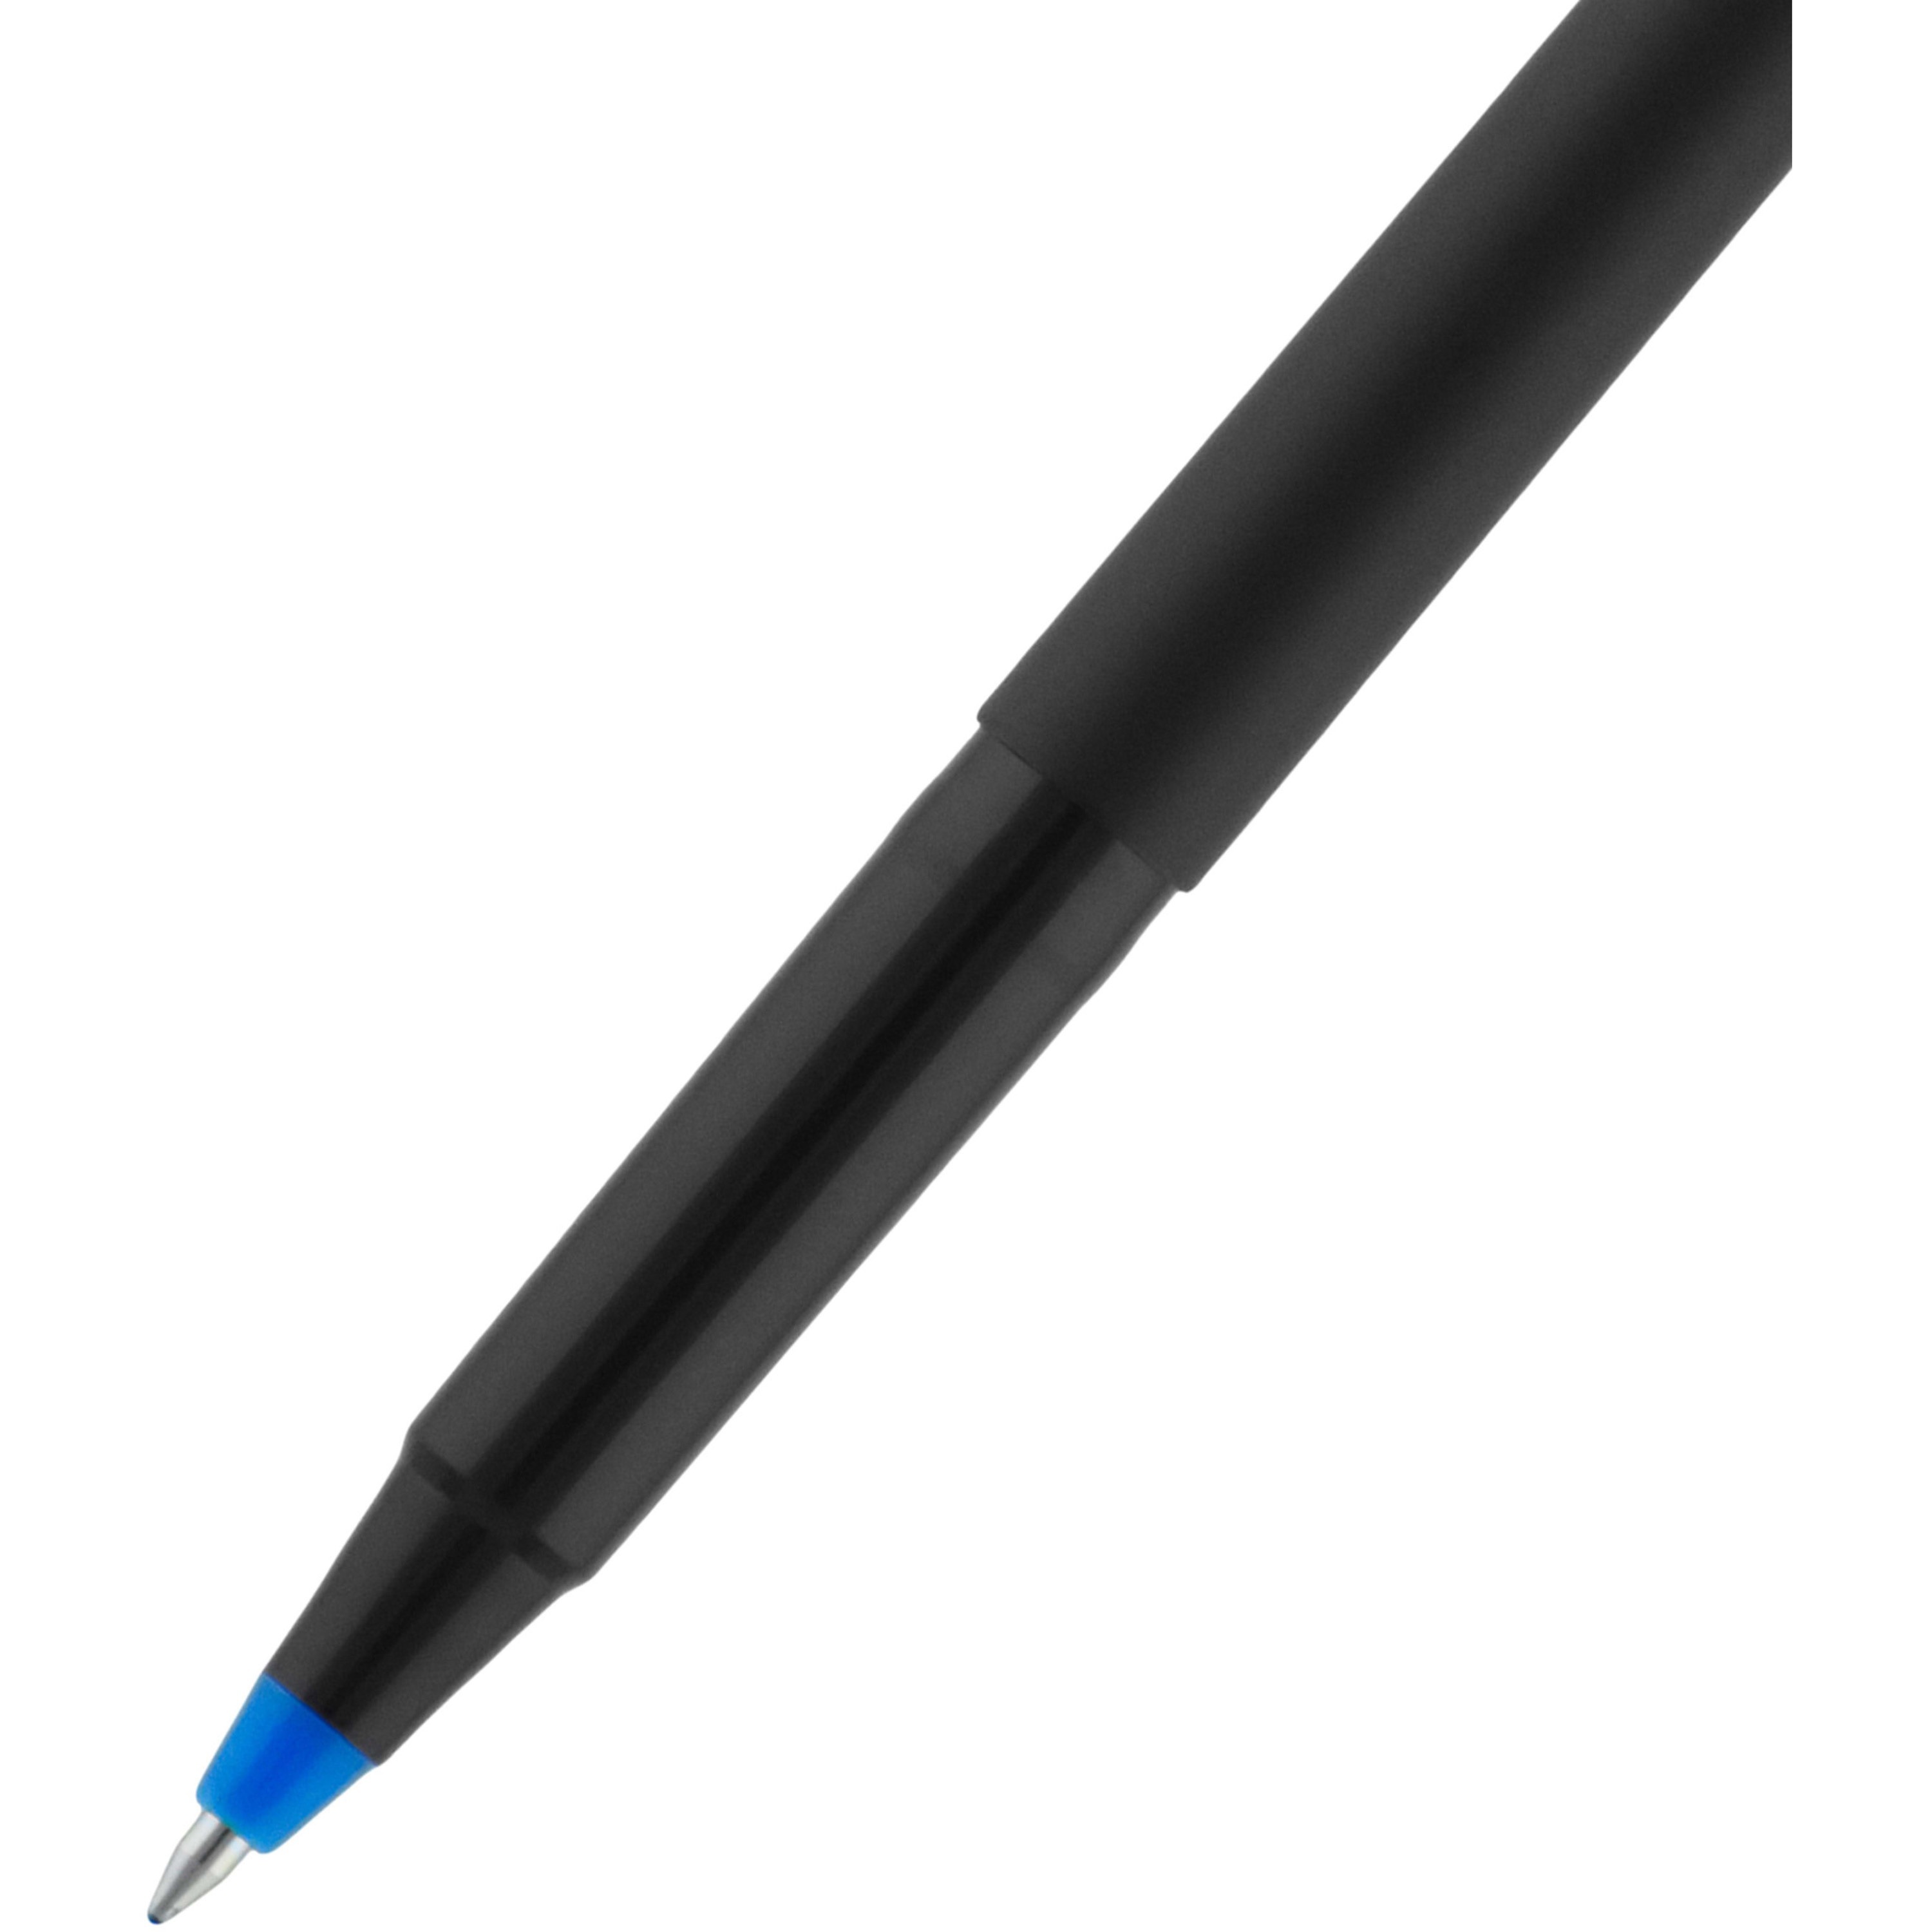 uniball™ ONYX, Rollerball Pen